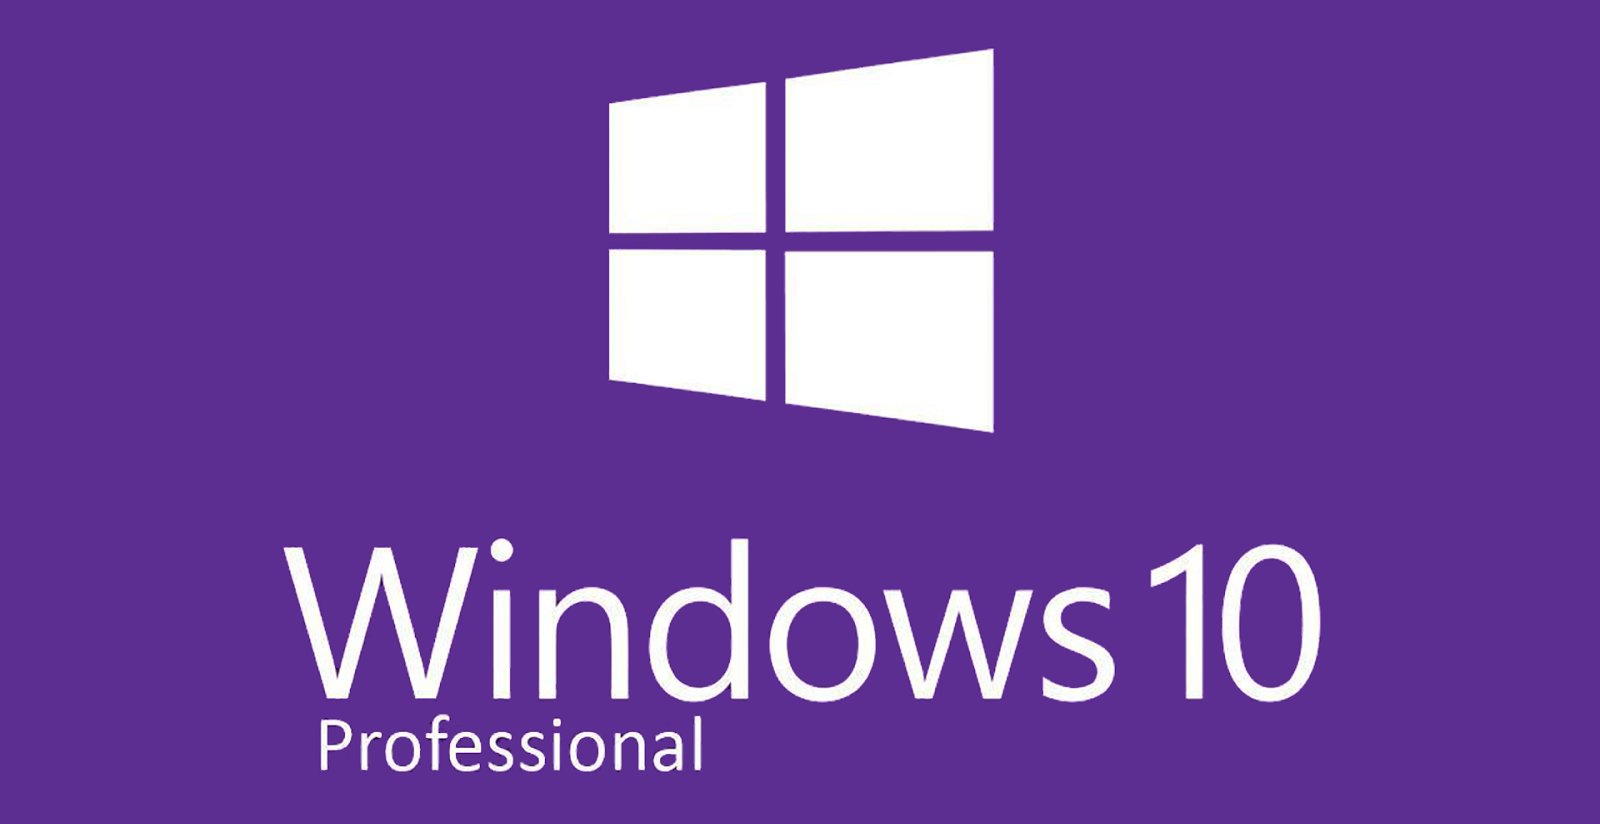 Производитель windows 10. Microsoft Windows 10. Windows 10 Pro. Microsoft Windows 10 professional. Логотип Windows 10.